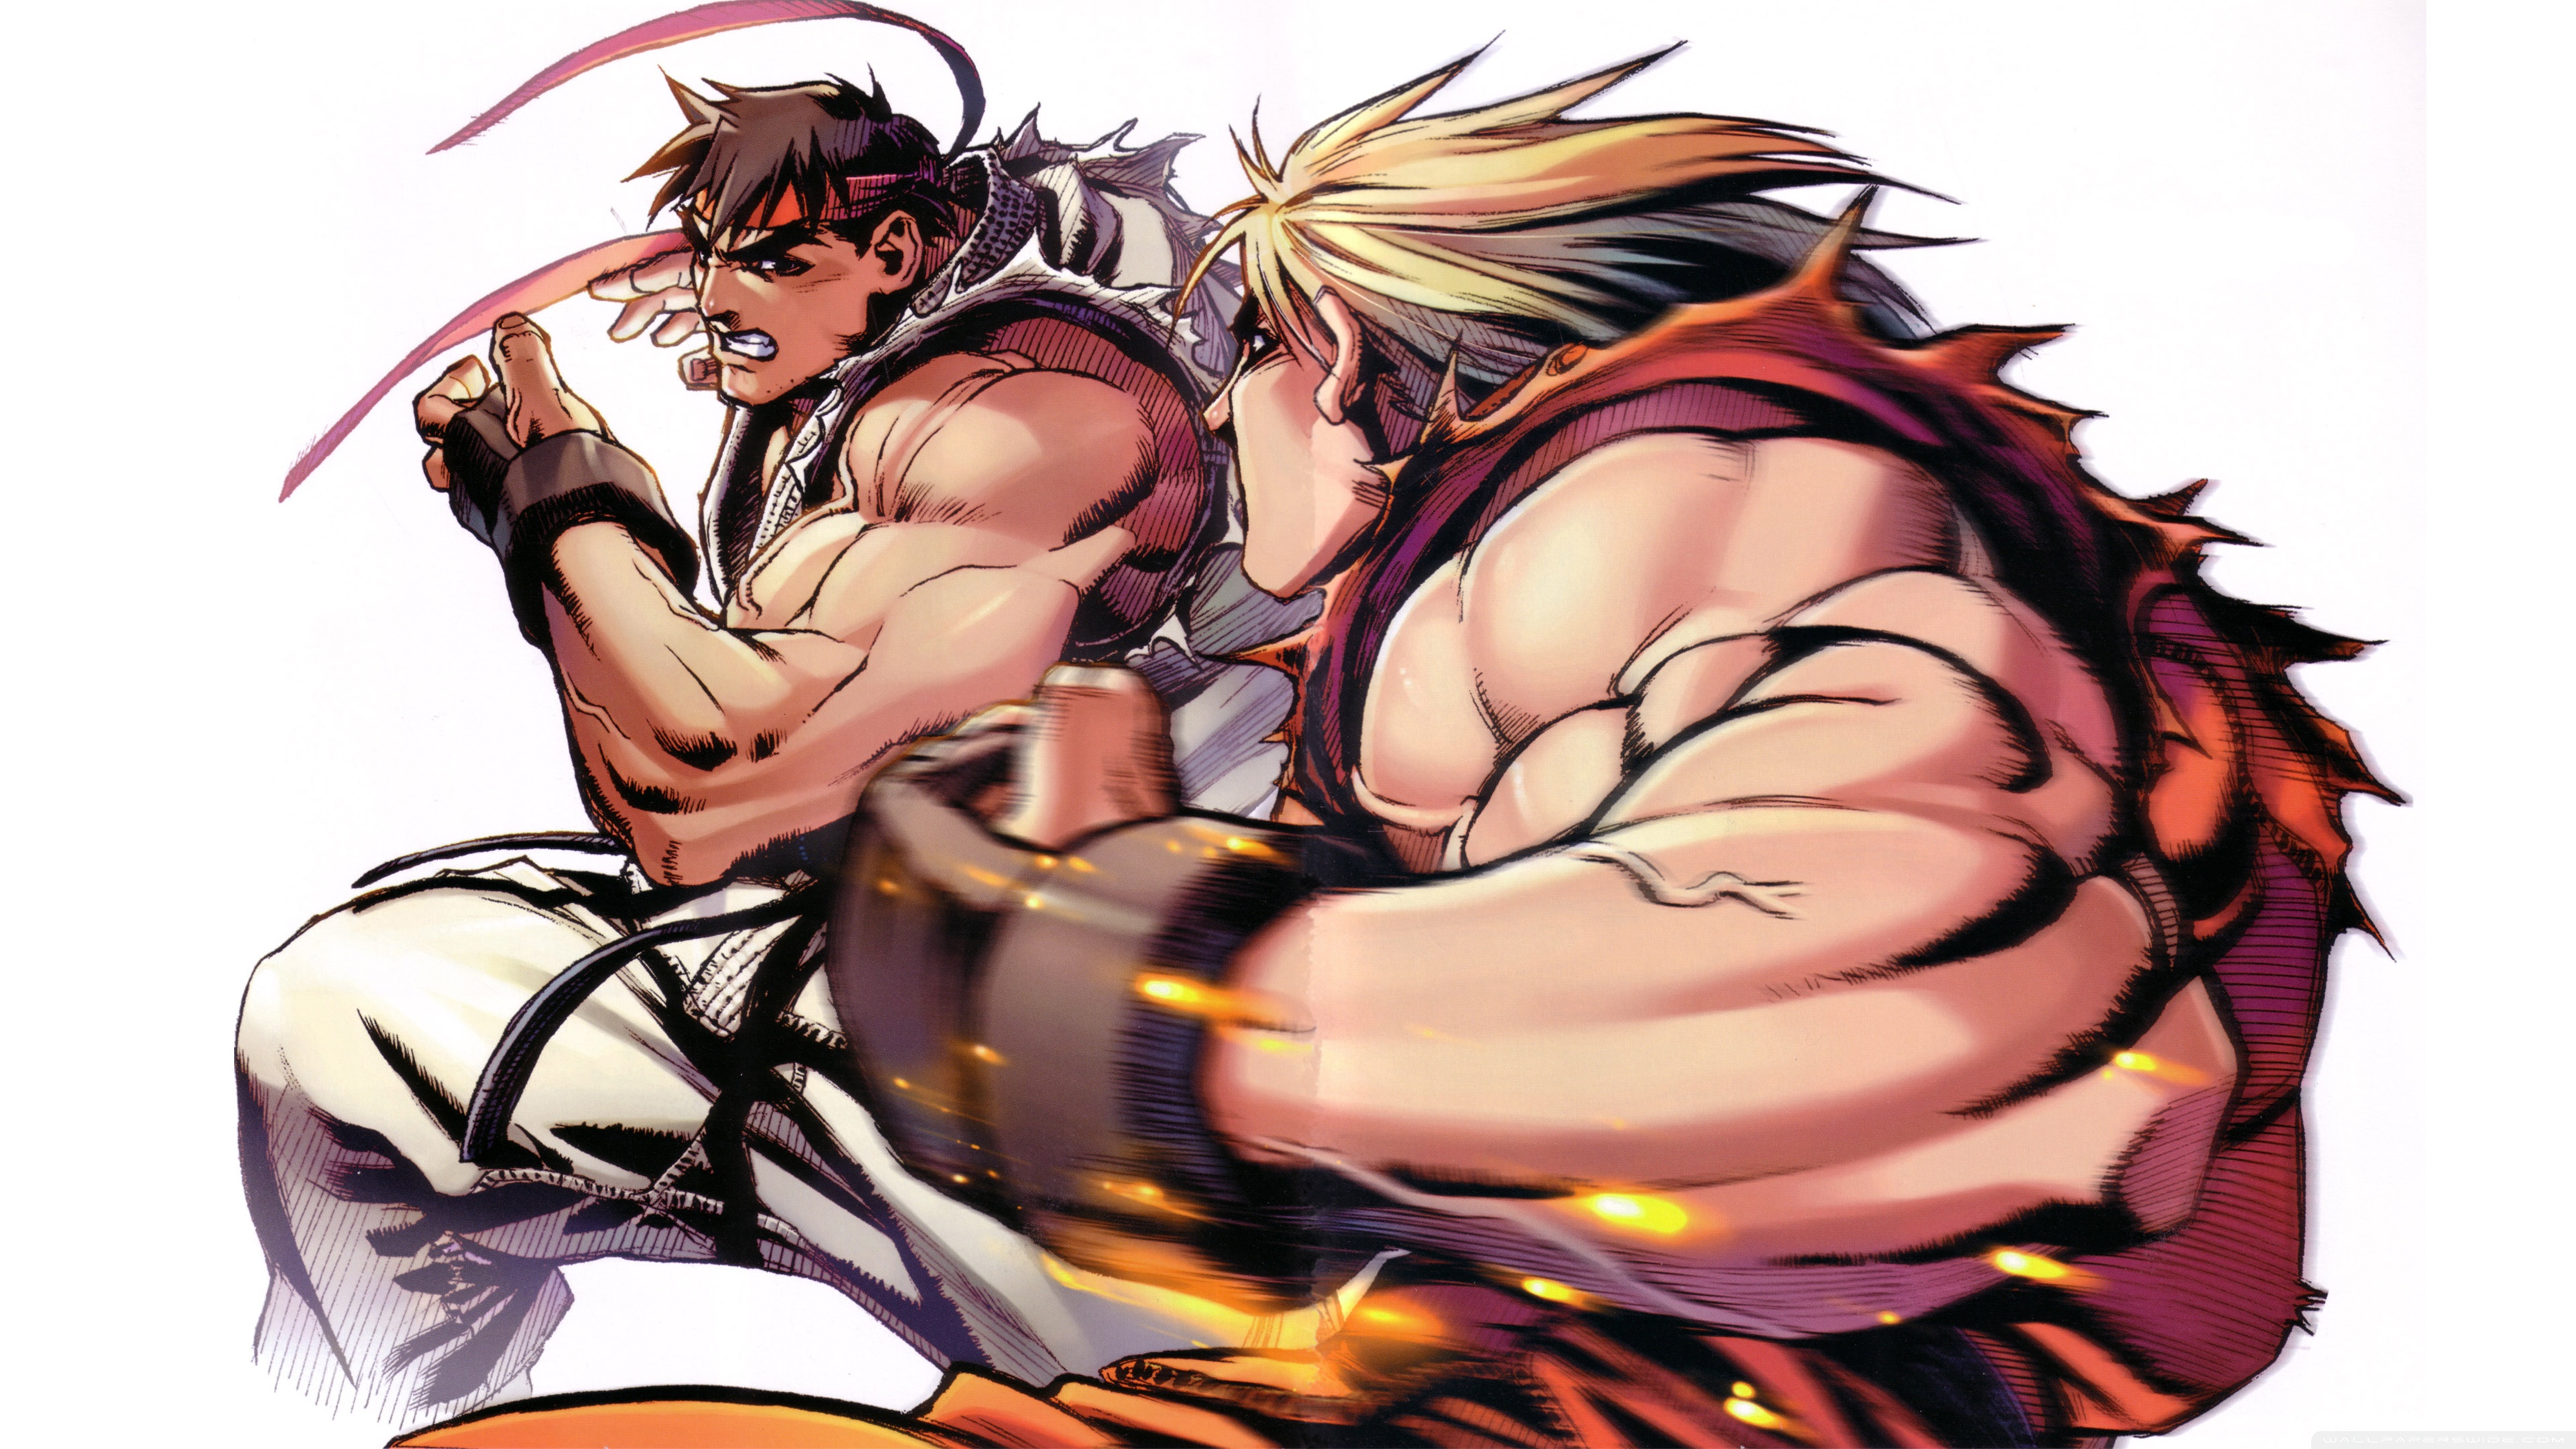 Street Fighter Desktop Art - Ryu vs. Ken